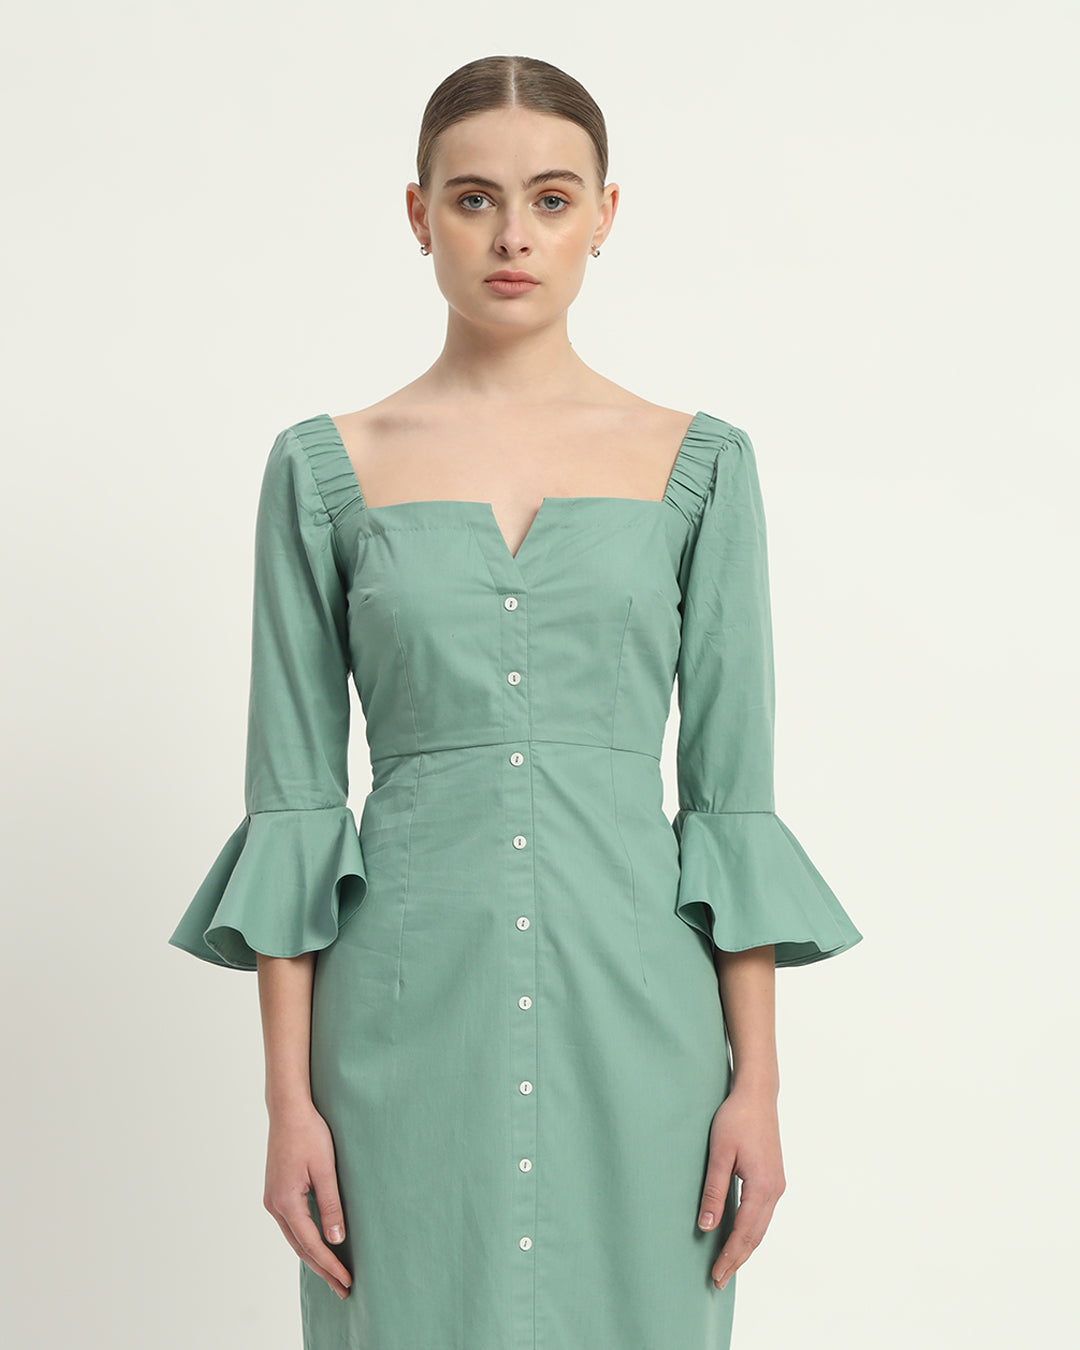 The Rosendale Mint Cotton Dress